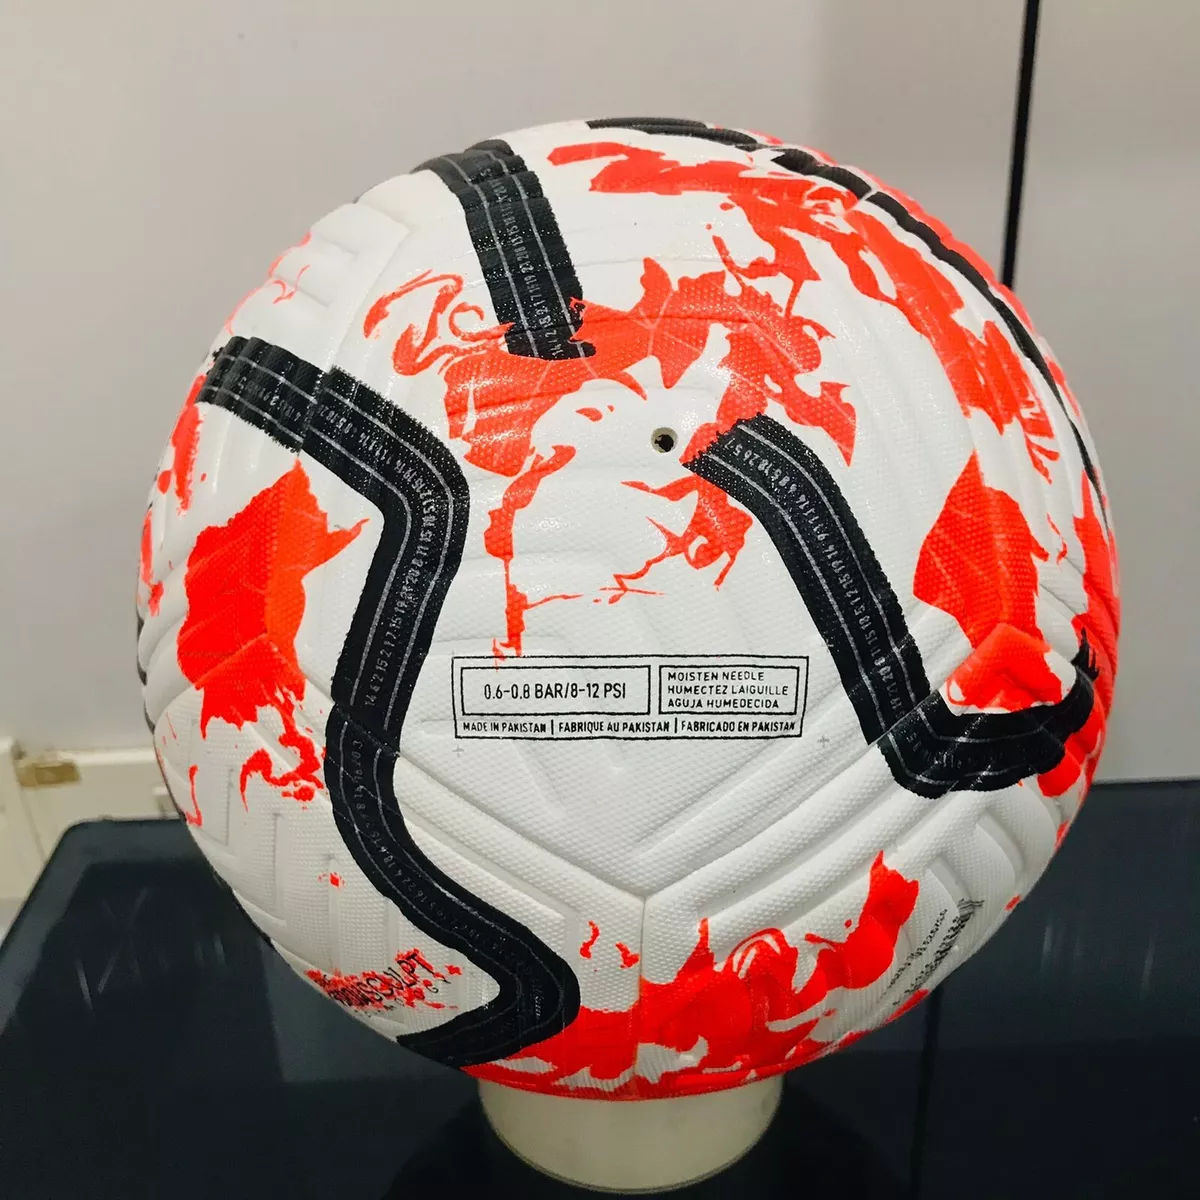 Nike Bola Premier League Flight Soccer Ball dn3602-710 5 Amarelo